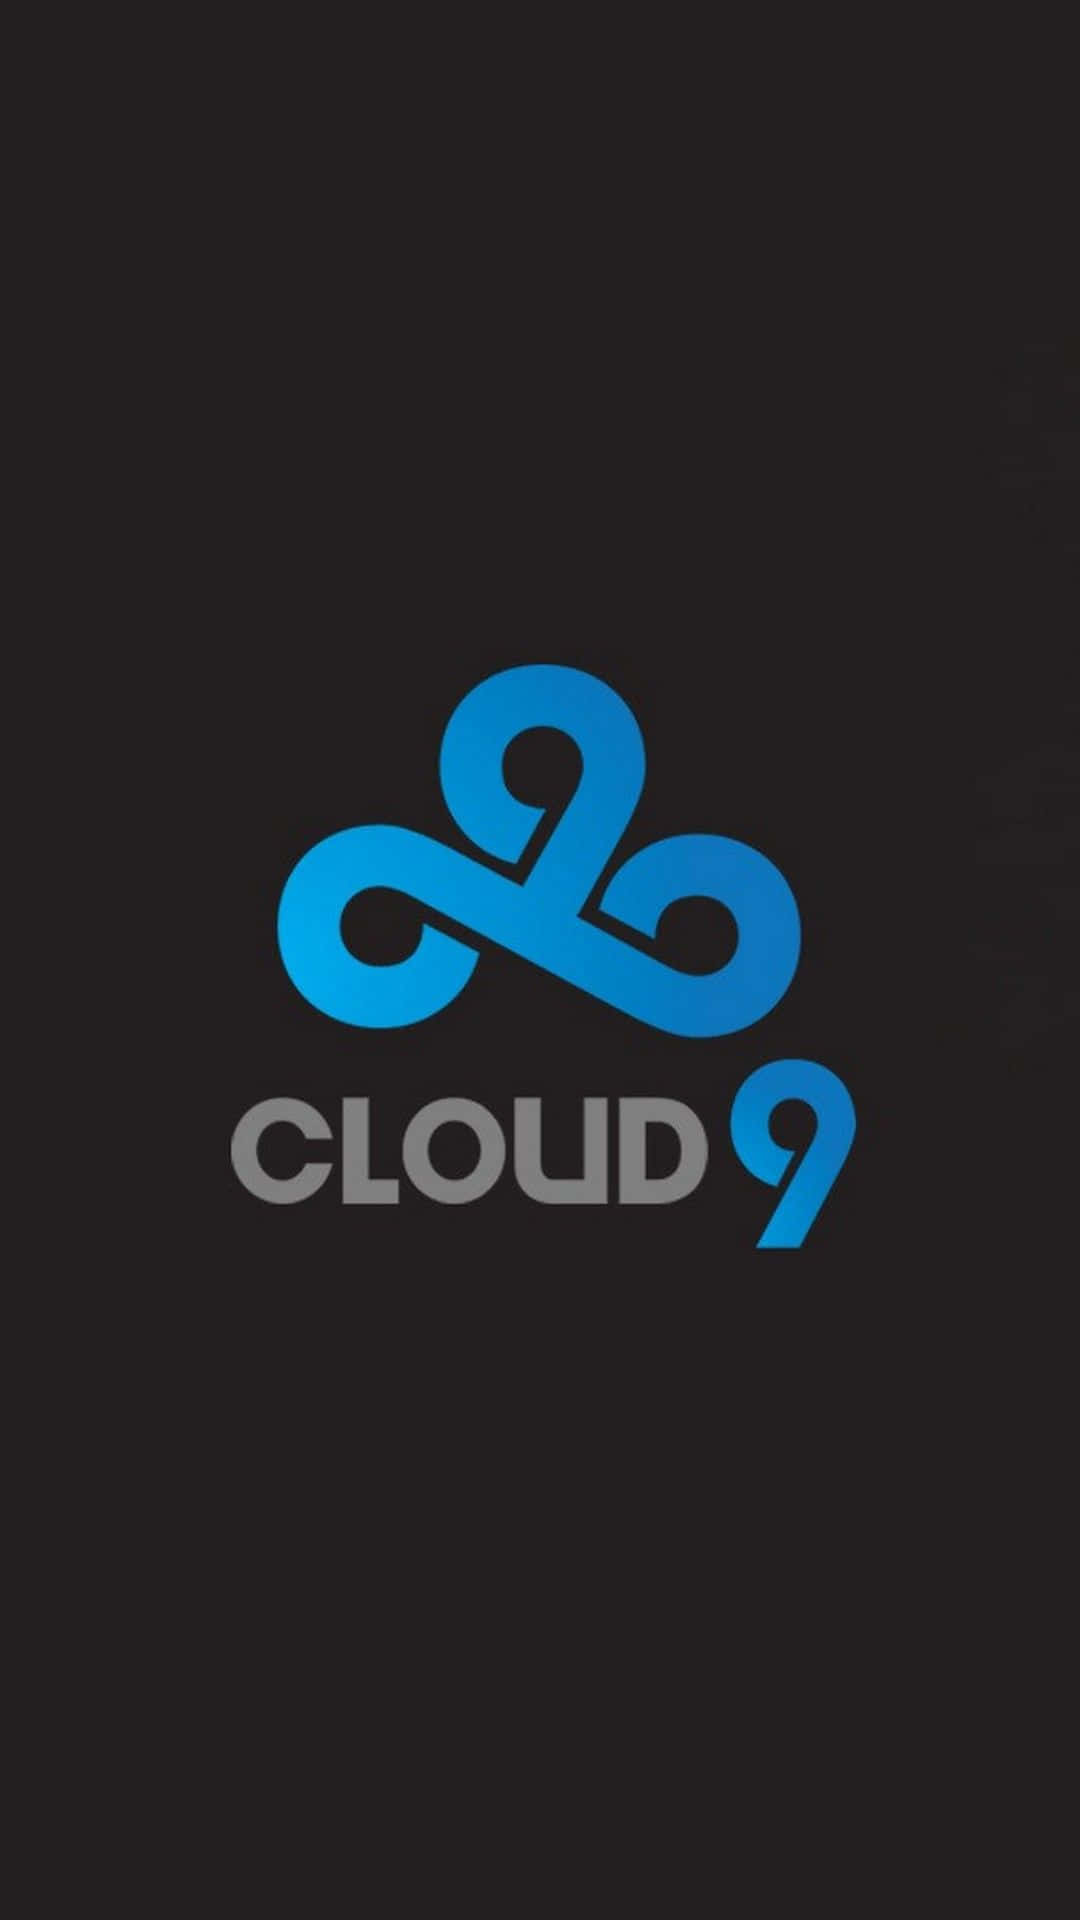 cloud 9 logo on a black background Wallpaper